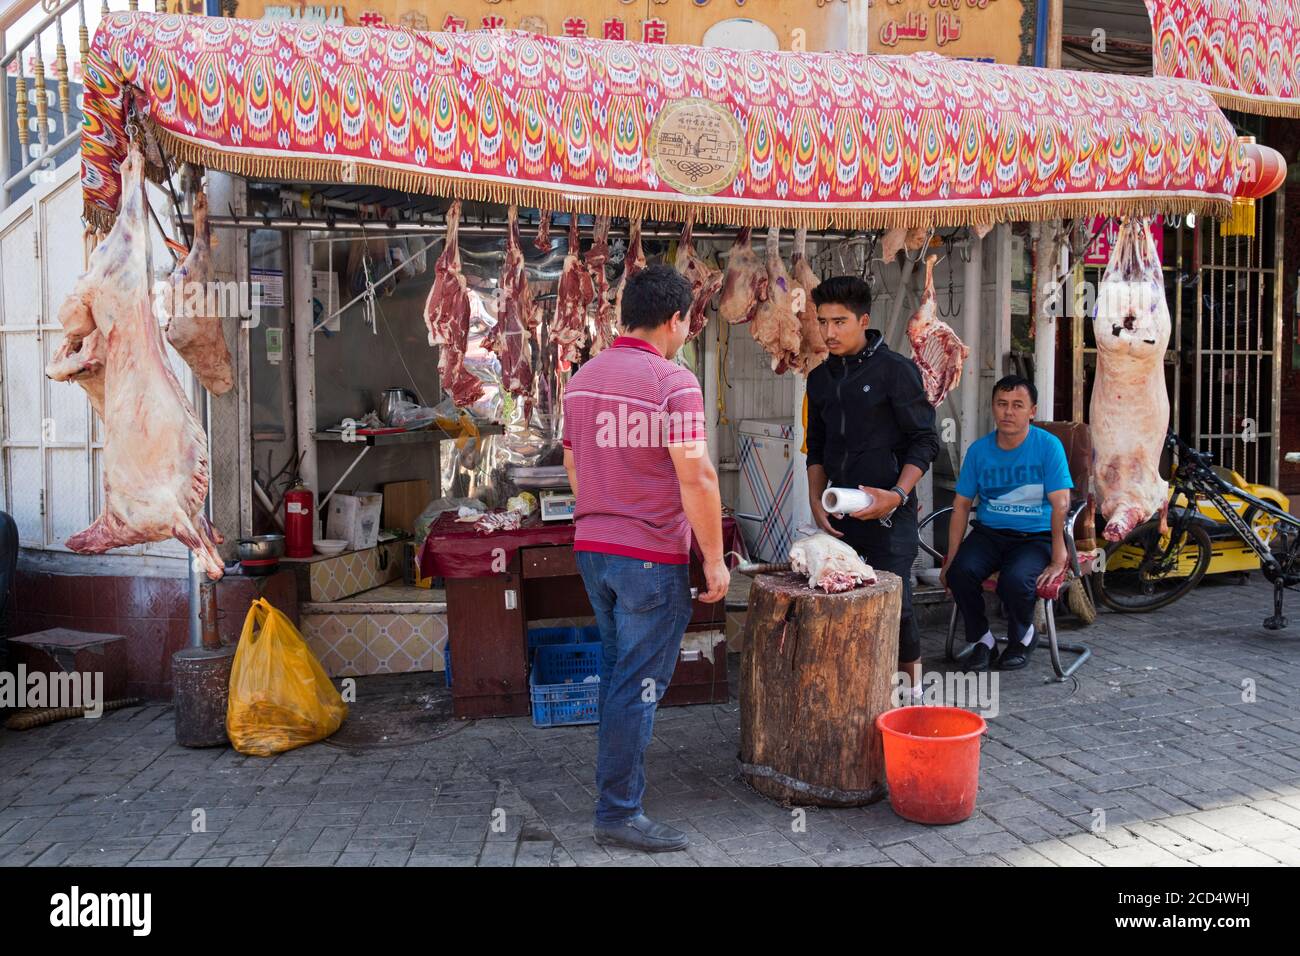 Uyghur street butcher selling pork's meat at butcher's shop / butchery in the city Kashgar / Kashi / Kasjgar, Xinjiang, China Stock Photo